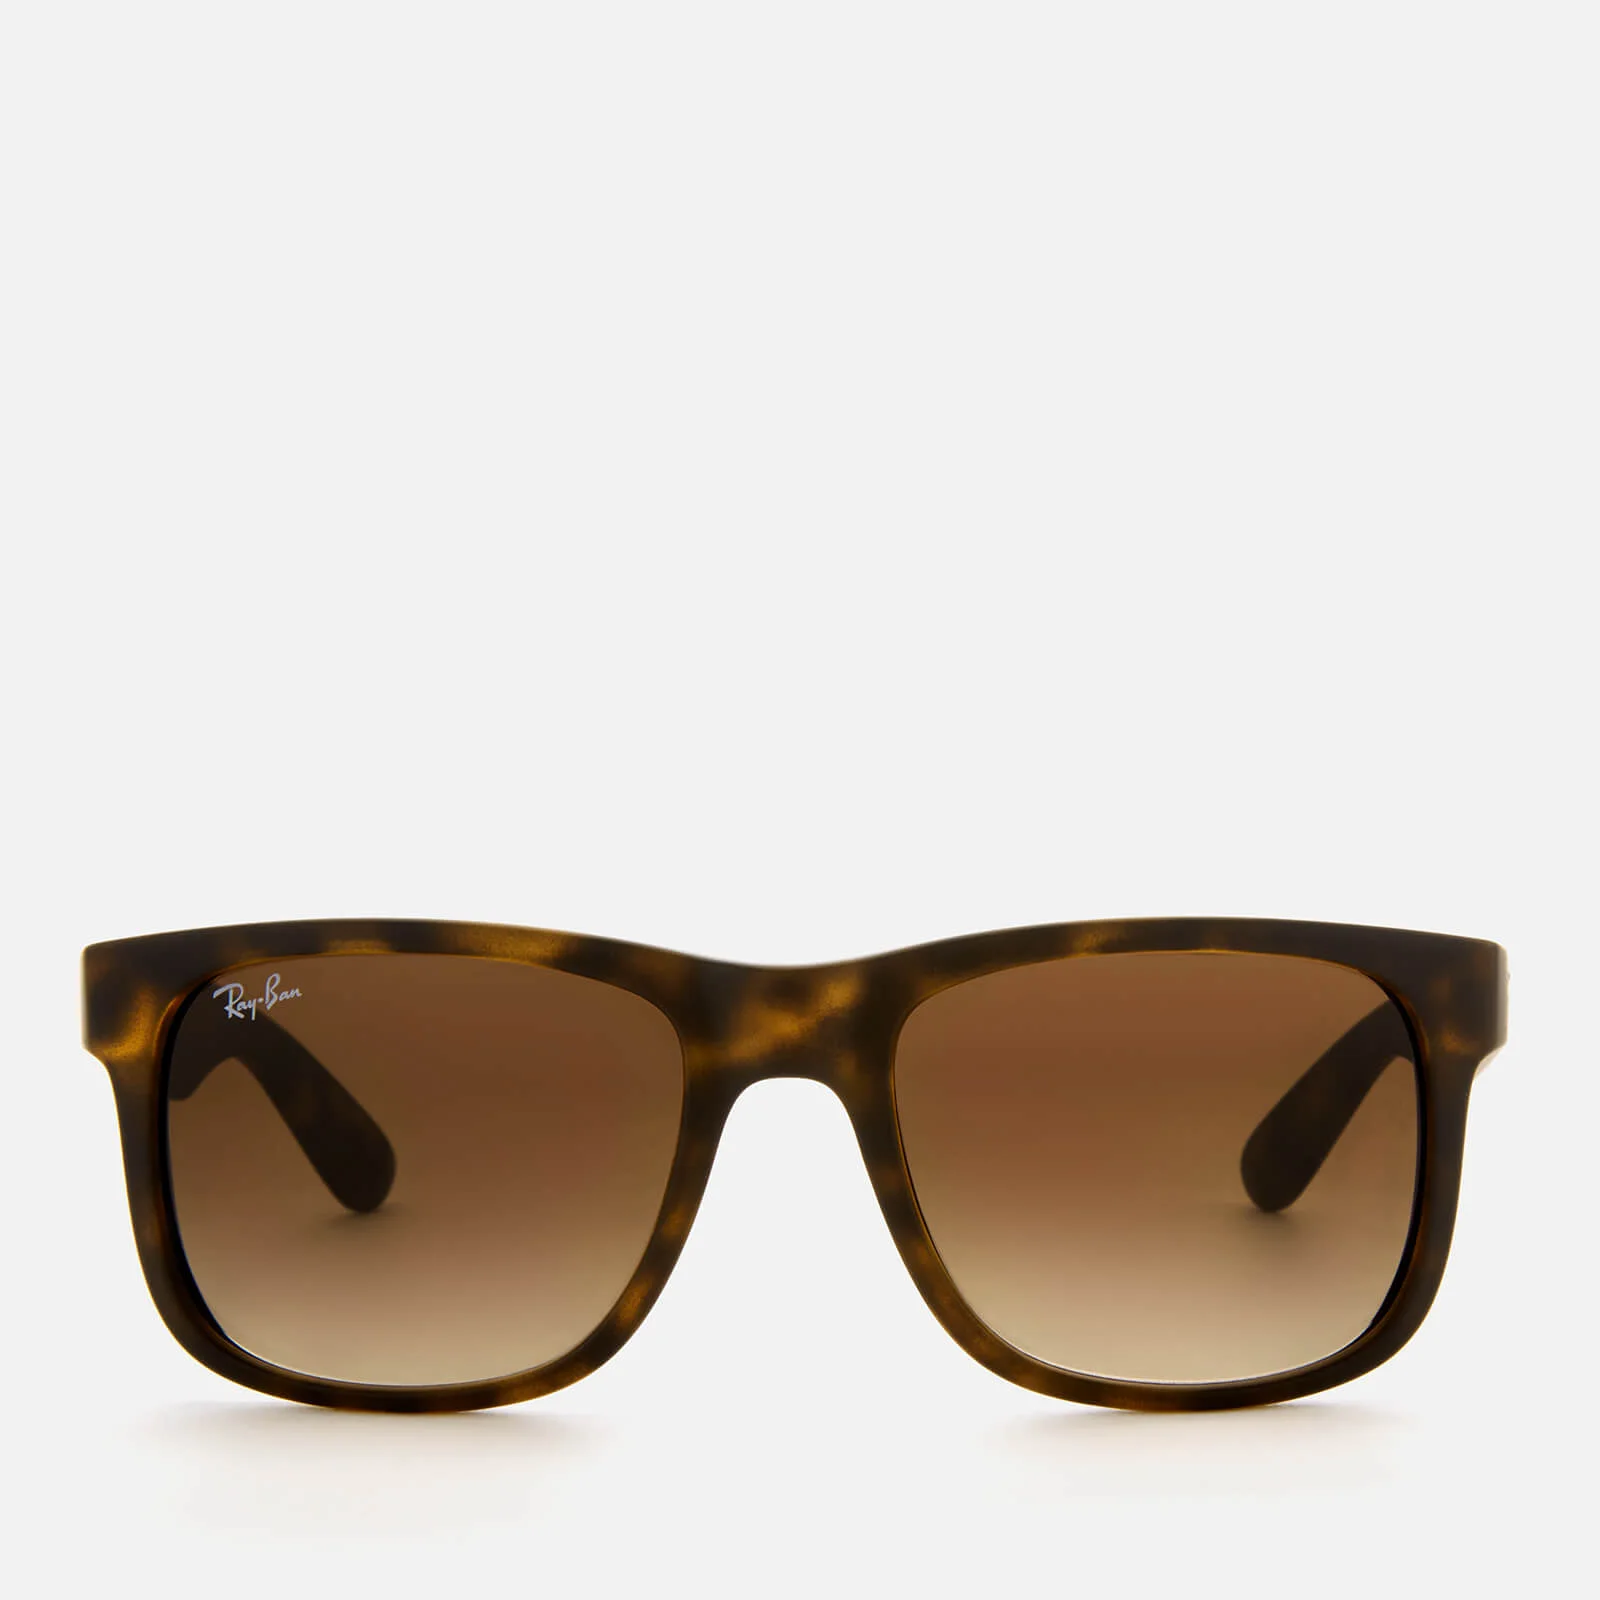 Ray-Ban Men's Justin Square Frame Sunglasses - Rubber Light Havana Image 1